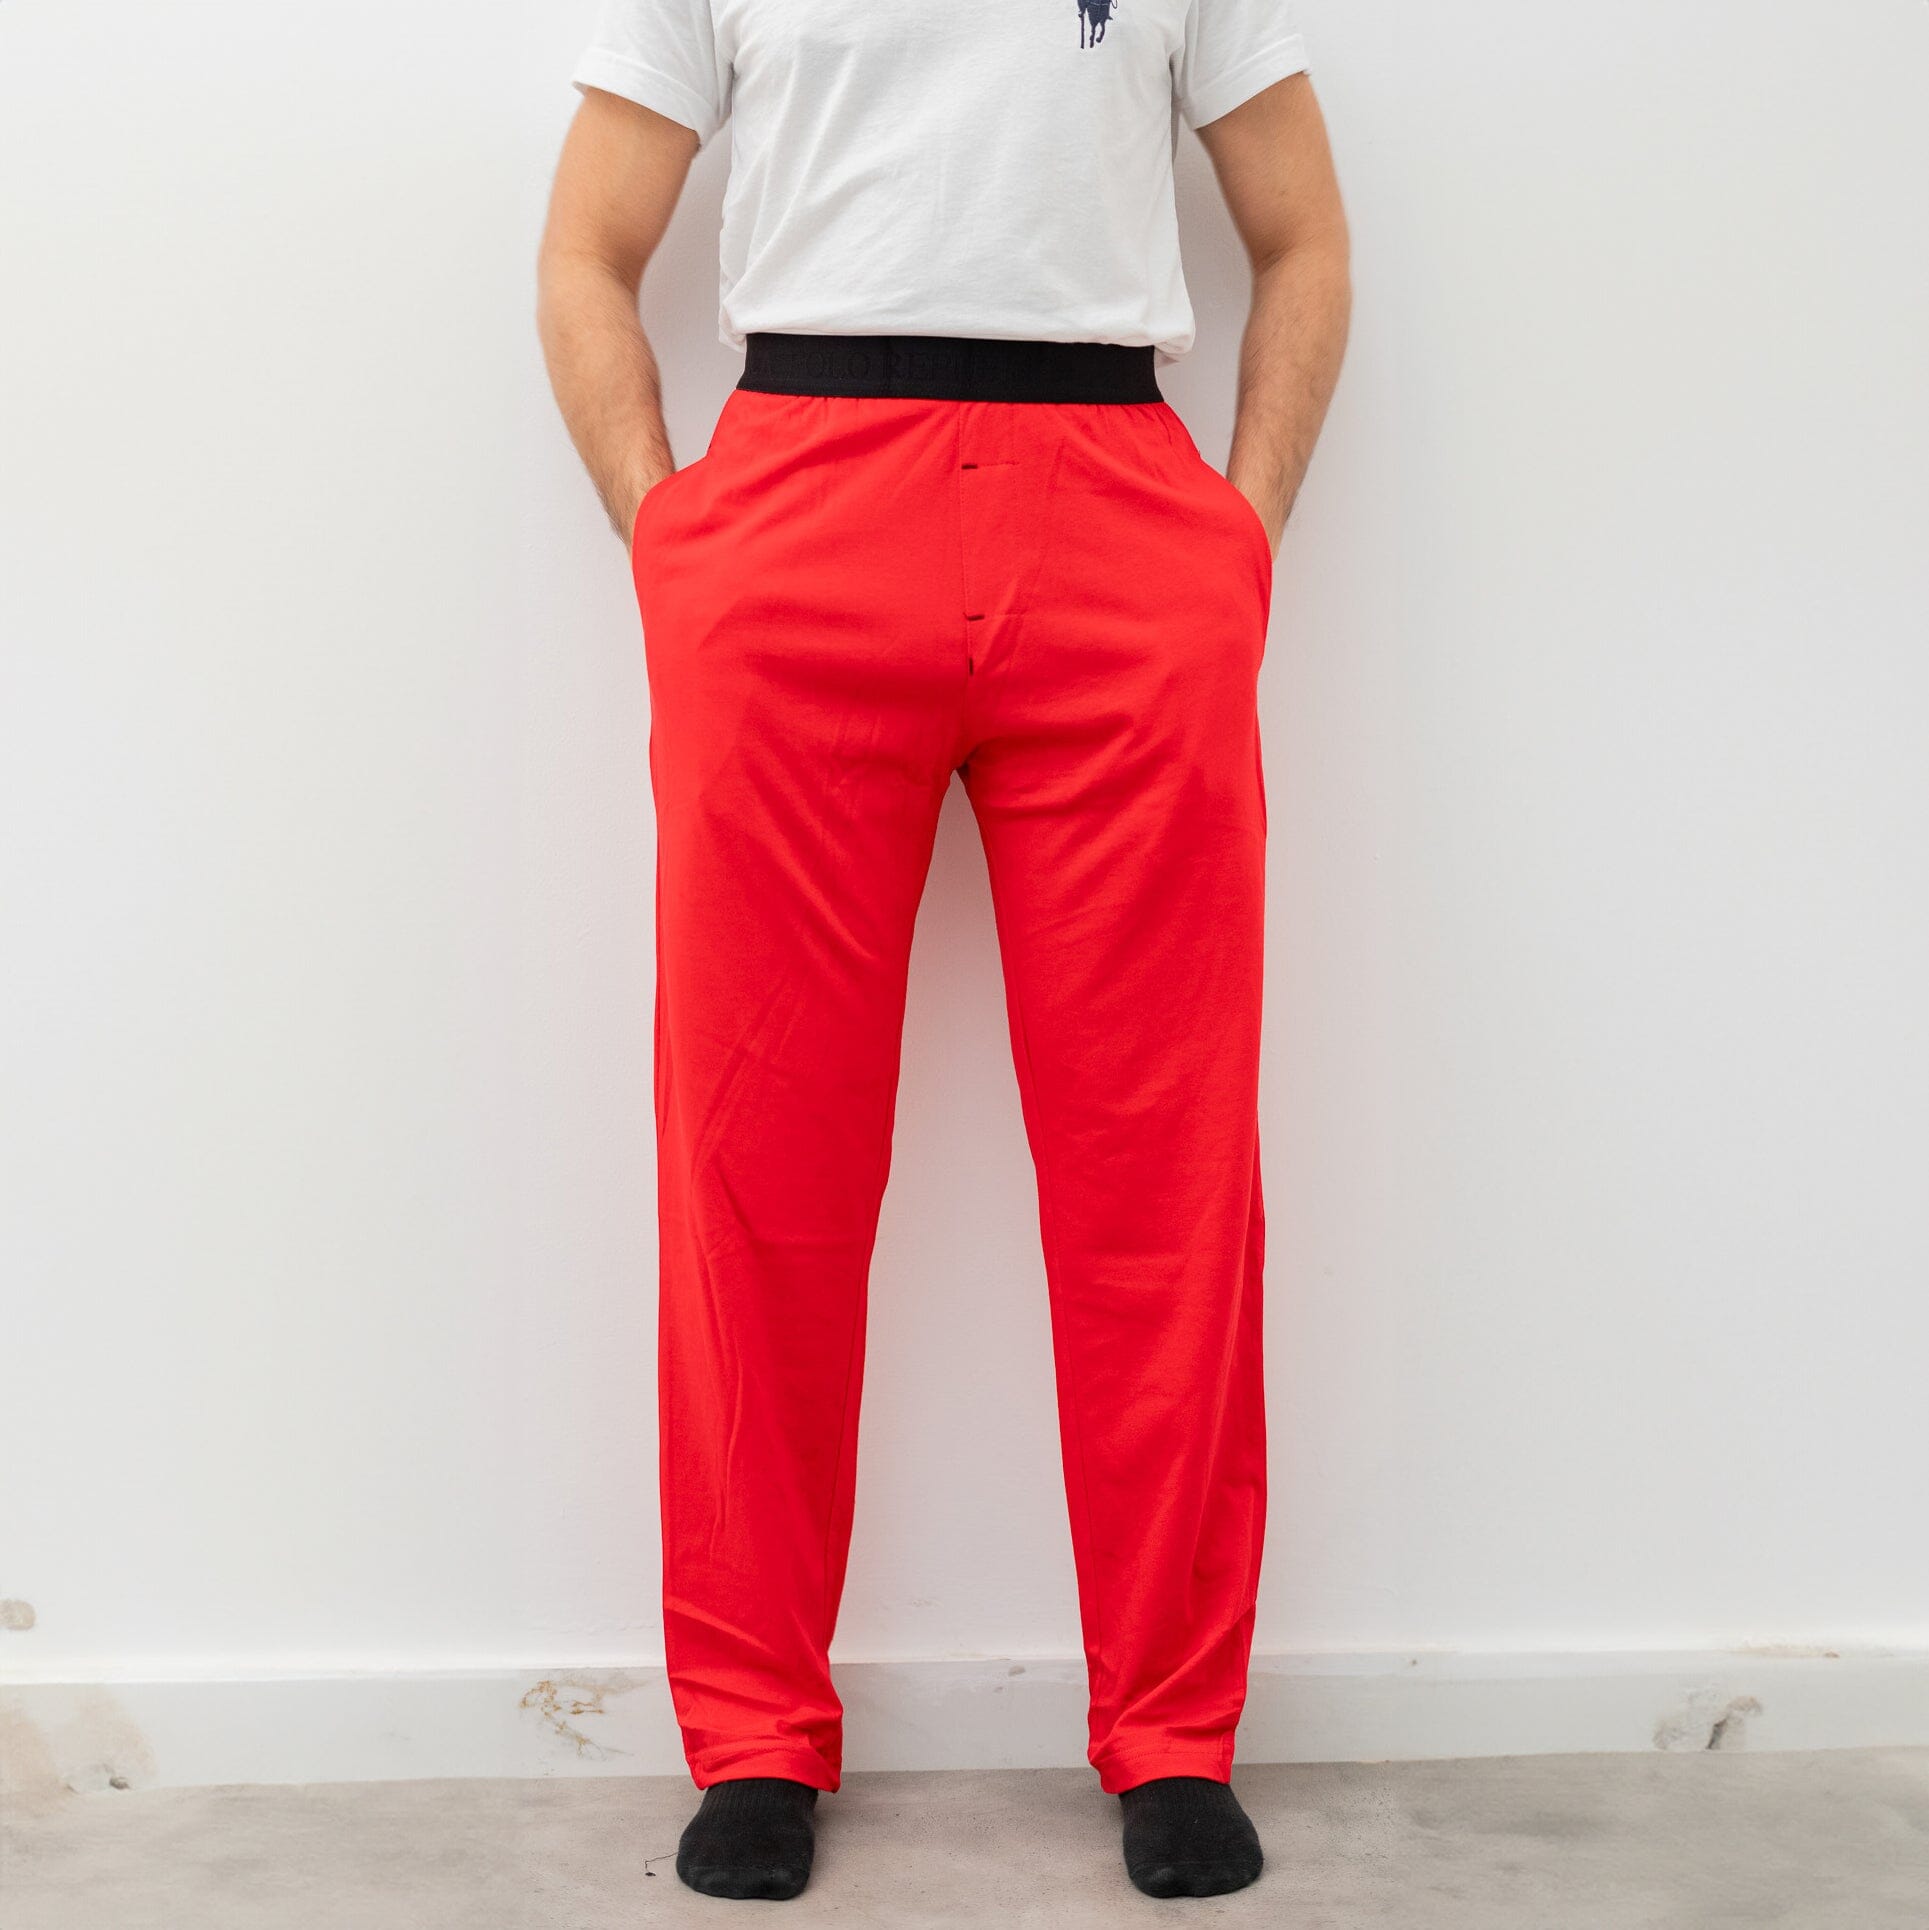 Polo Republica Men's Essentials Jersey Lounge Pants Men's Trousers Polo Republica Red S 